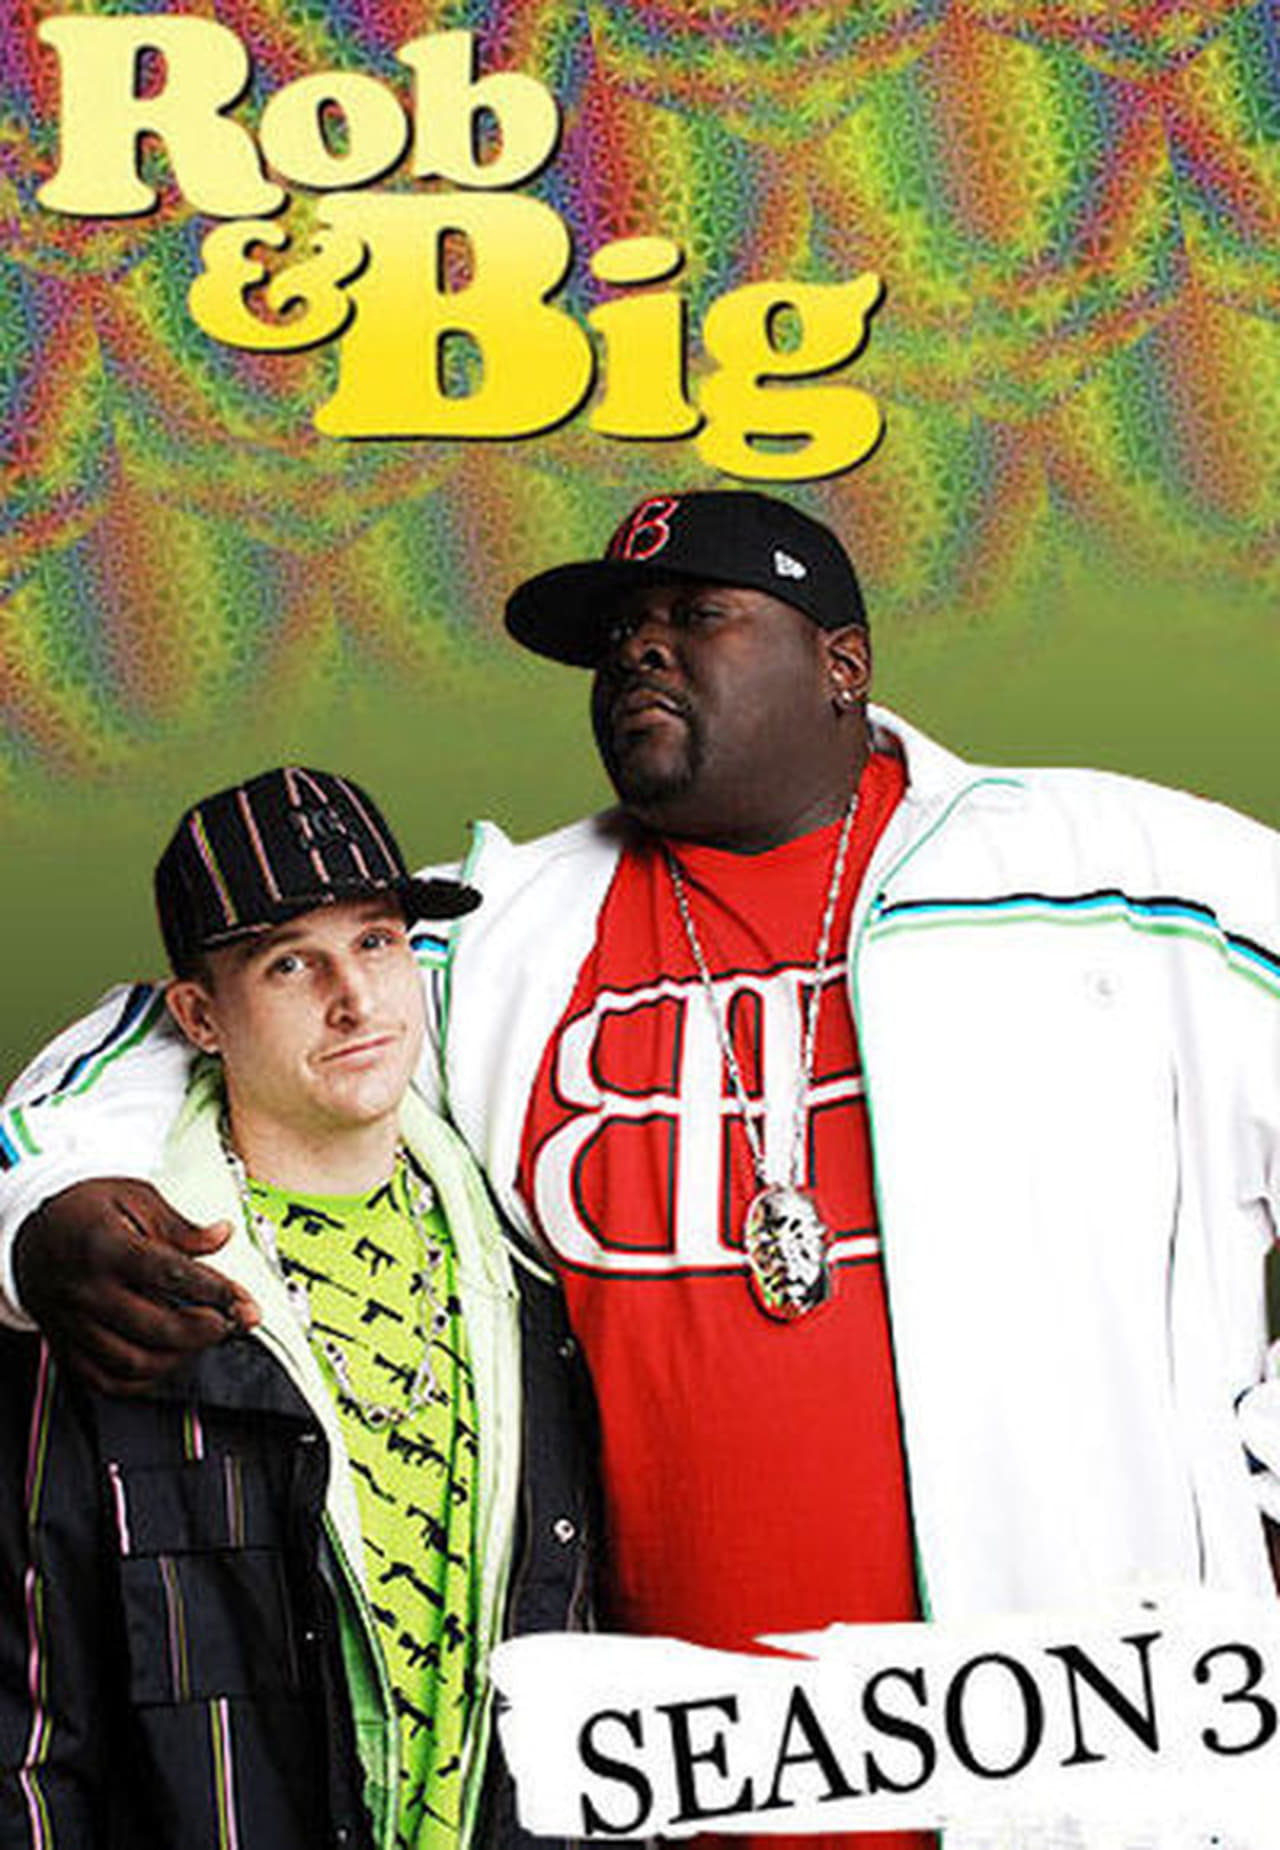 Rob & Big Season 3